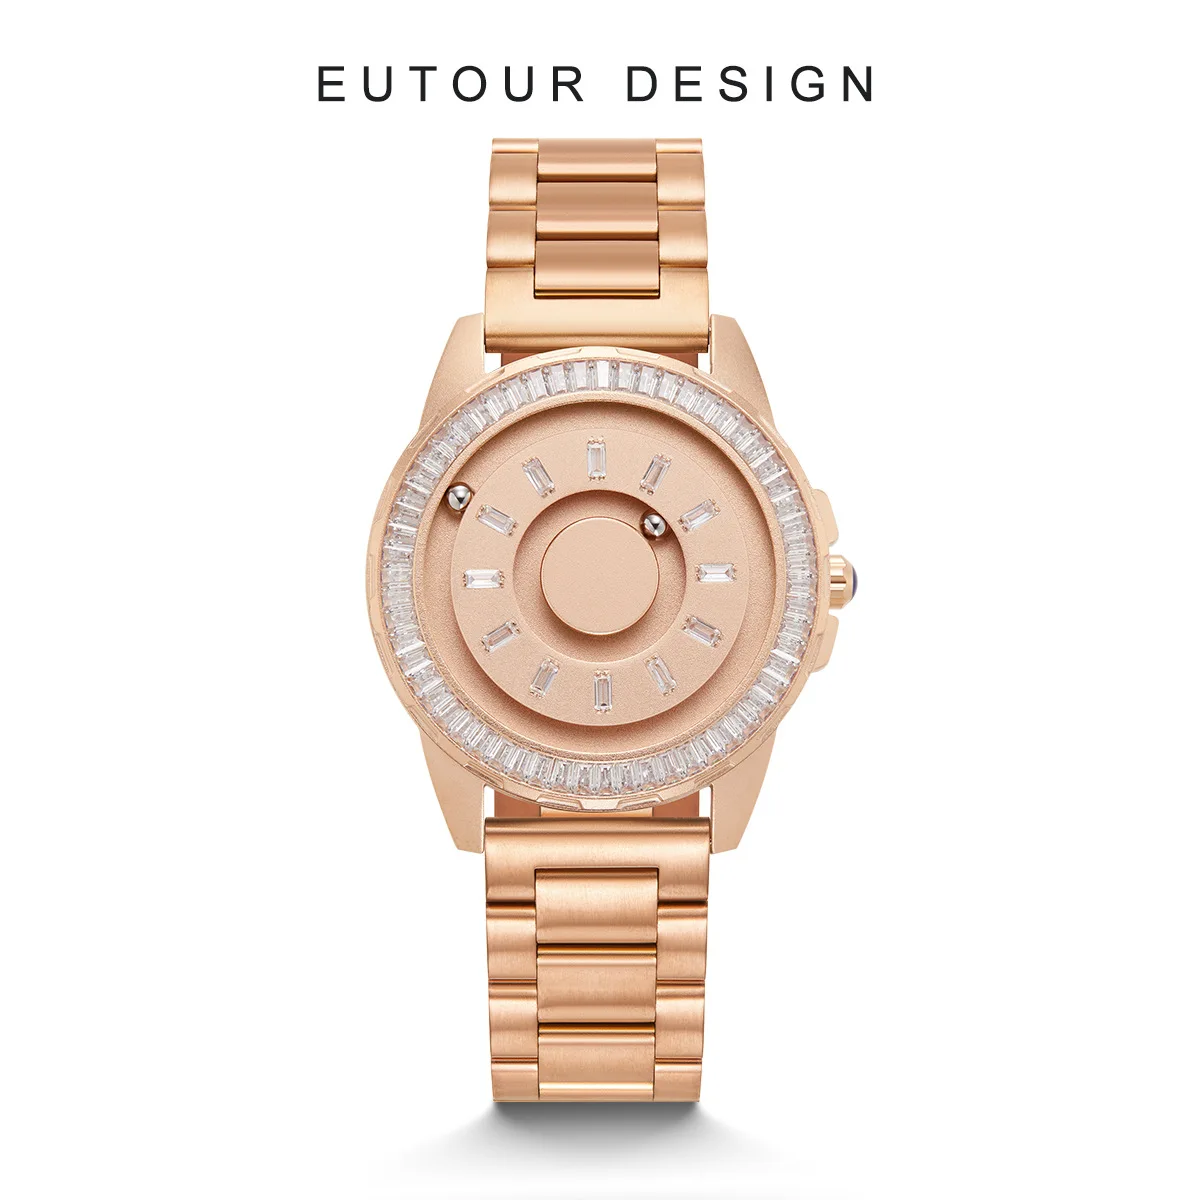 

New Limited Edition Luxury Jewelry Crystal Inlaid Men's Watch Unisex Designer Watch